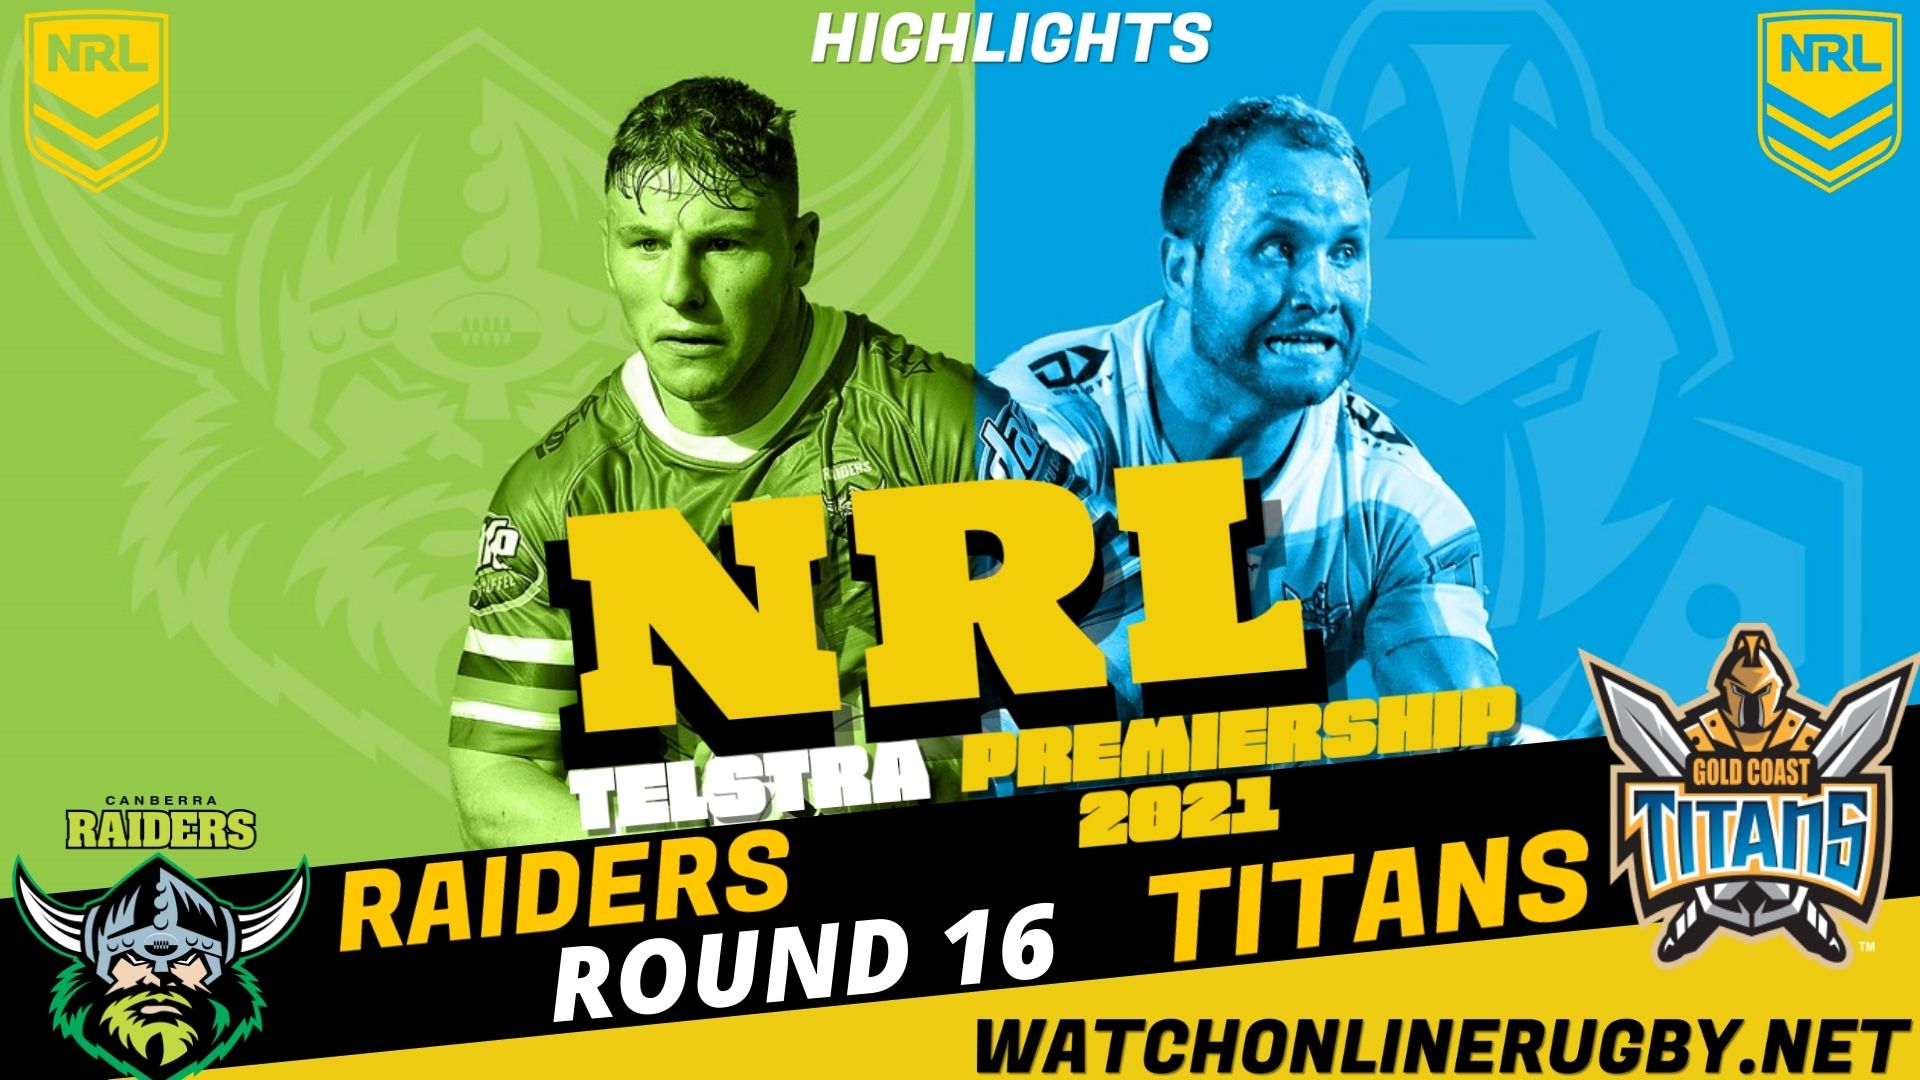 Raiders Vs Titans Highlights RD 16 NRL Rugby